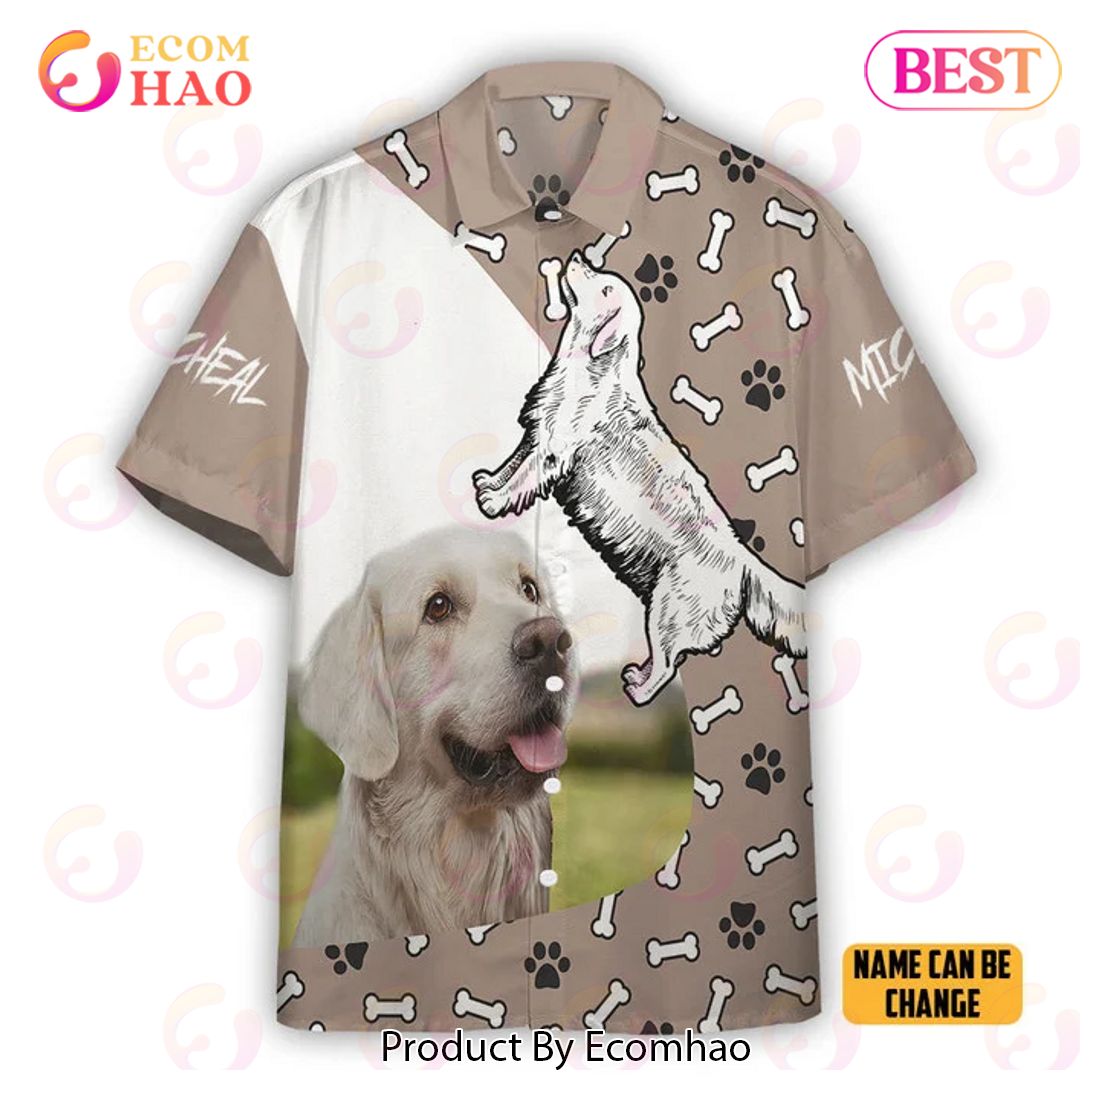 Chihuahua Dog Lv Louis Vuitton Shirt - Guineashirt Premium ™ LLC